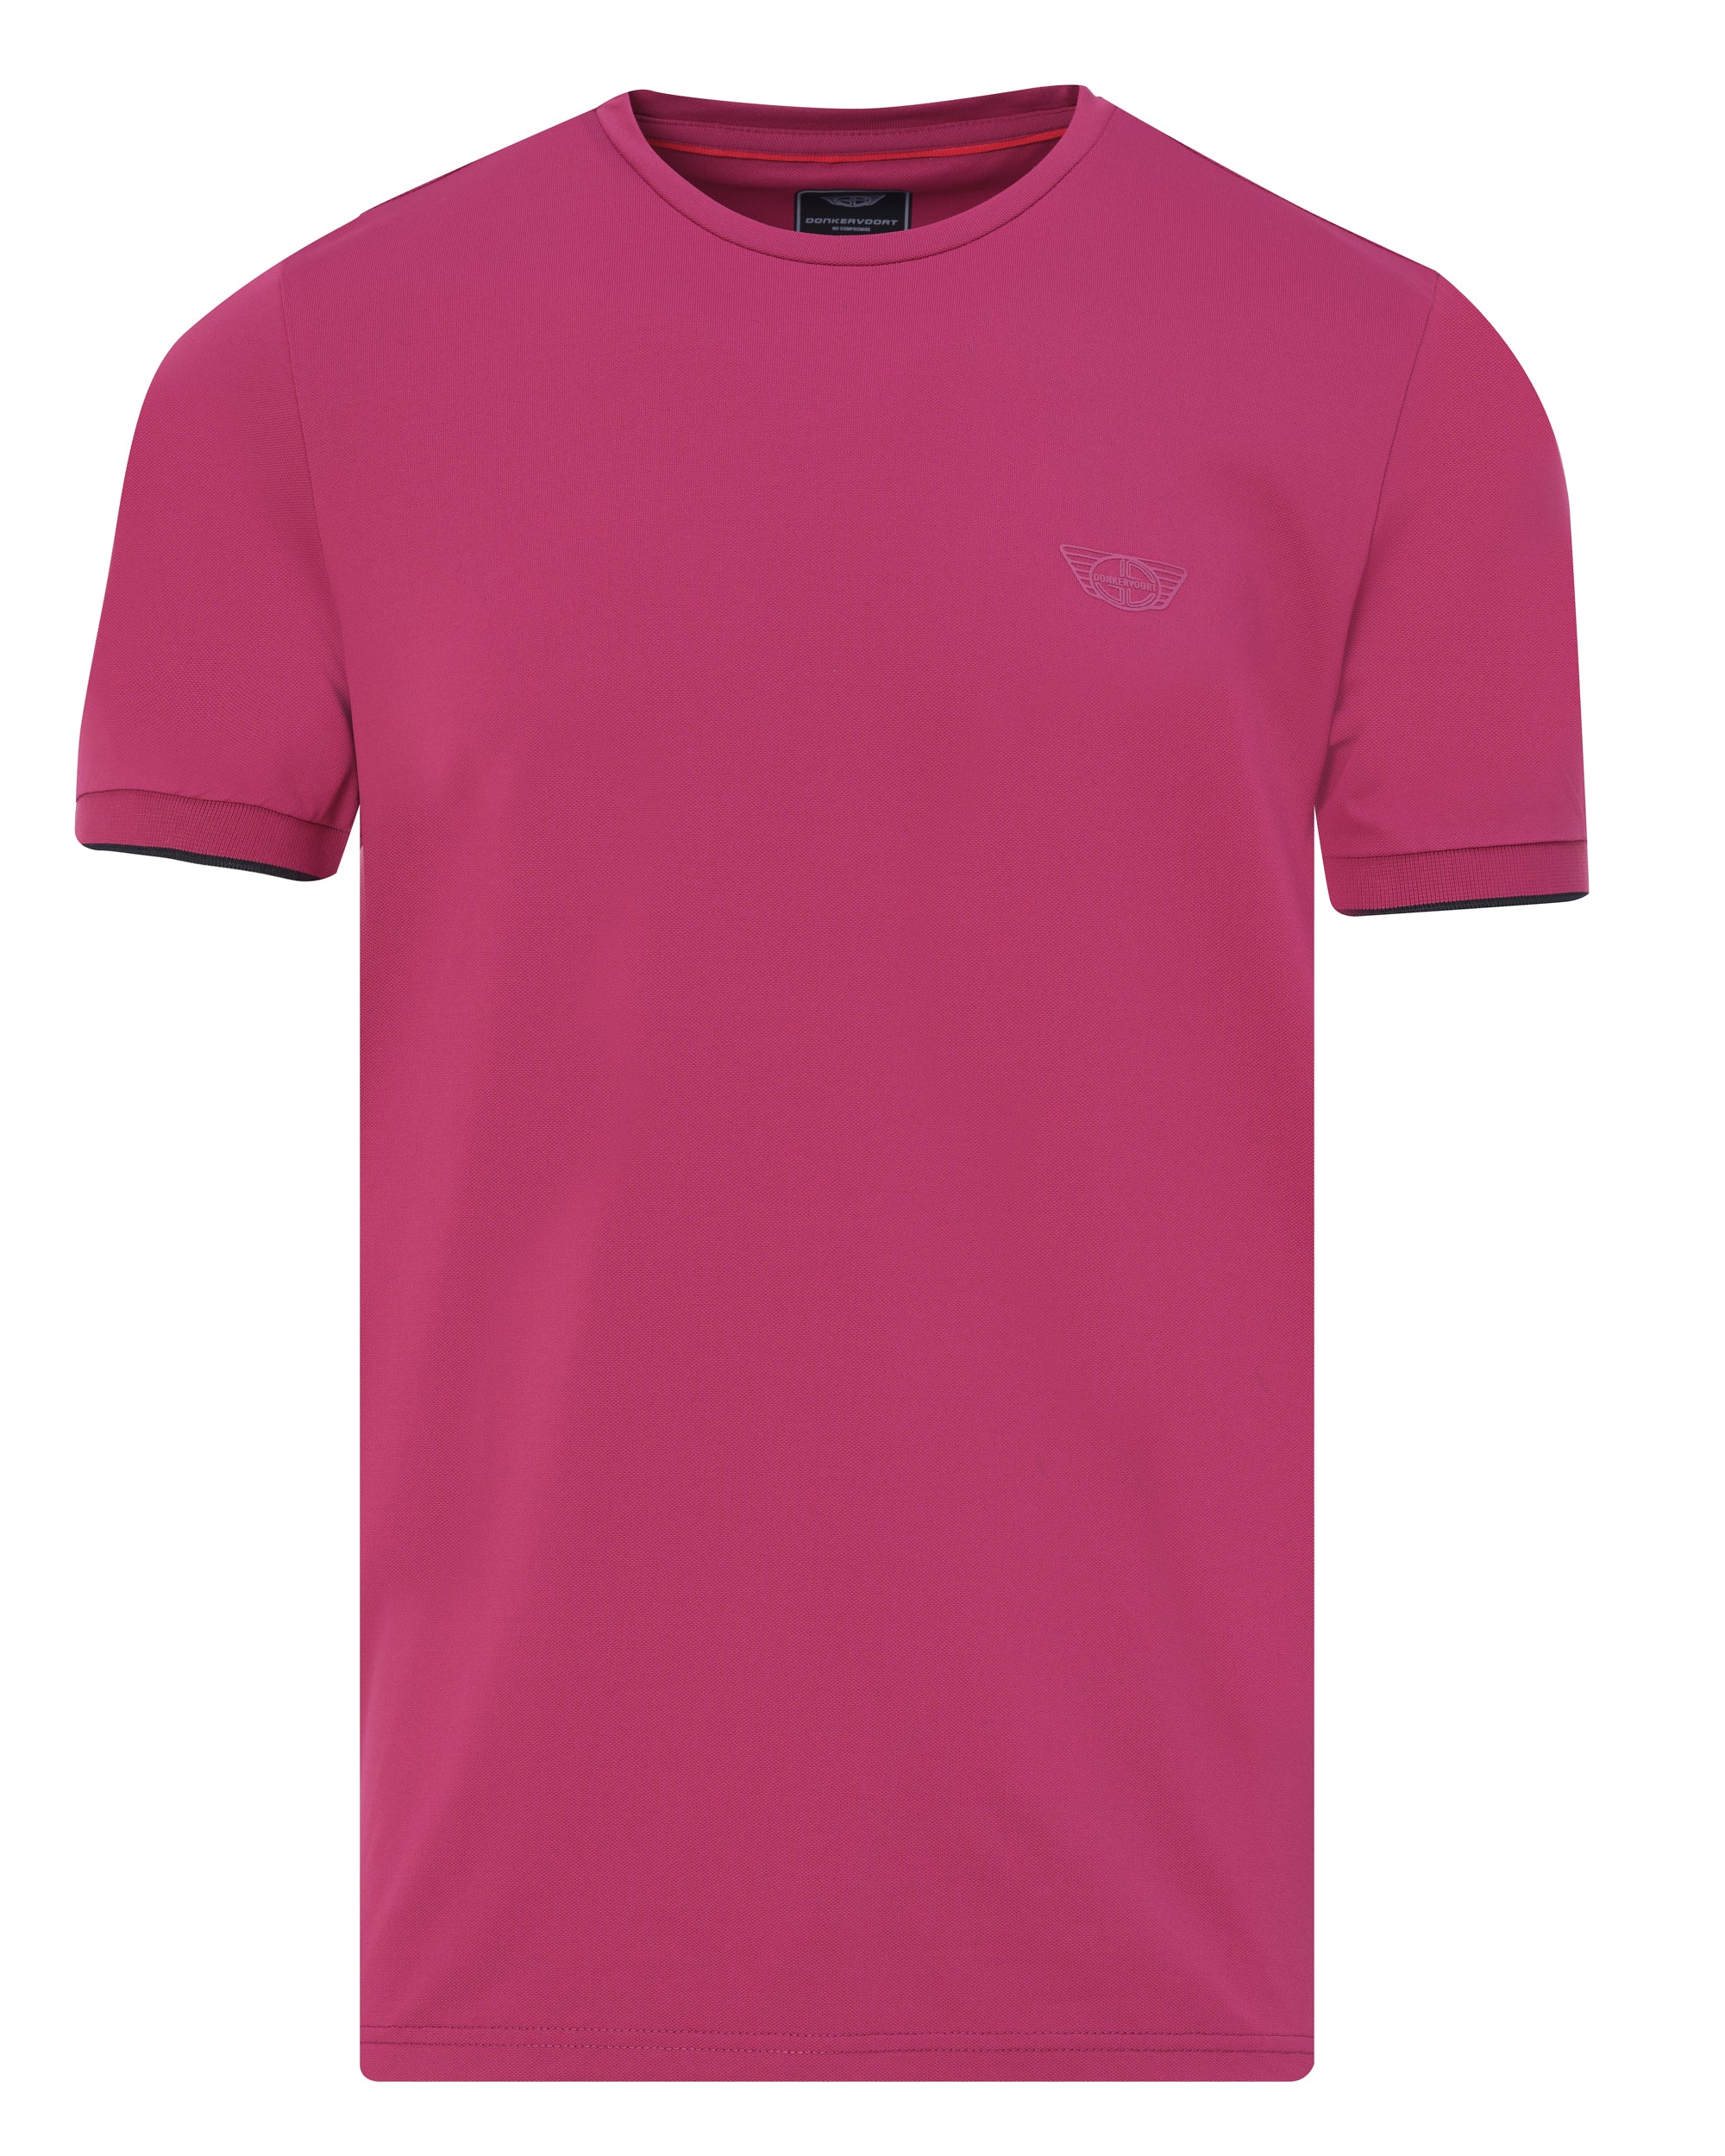 Donkervoort T-shirt KM - Beaujolais Pink